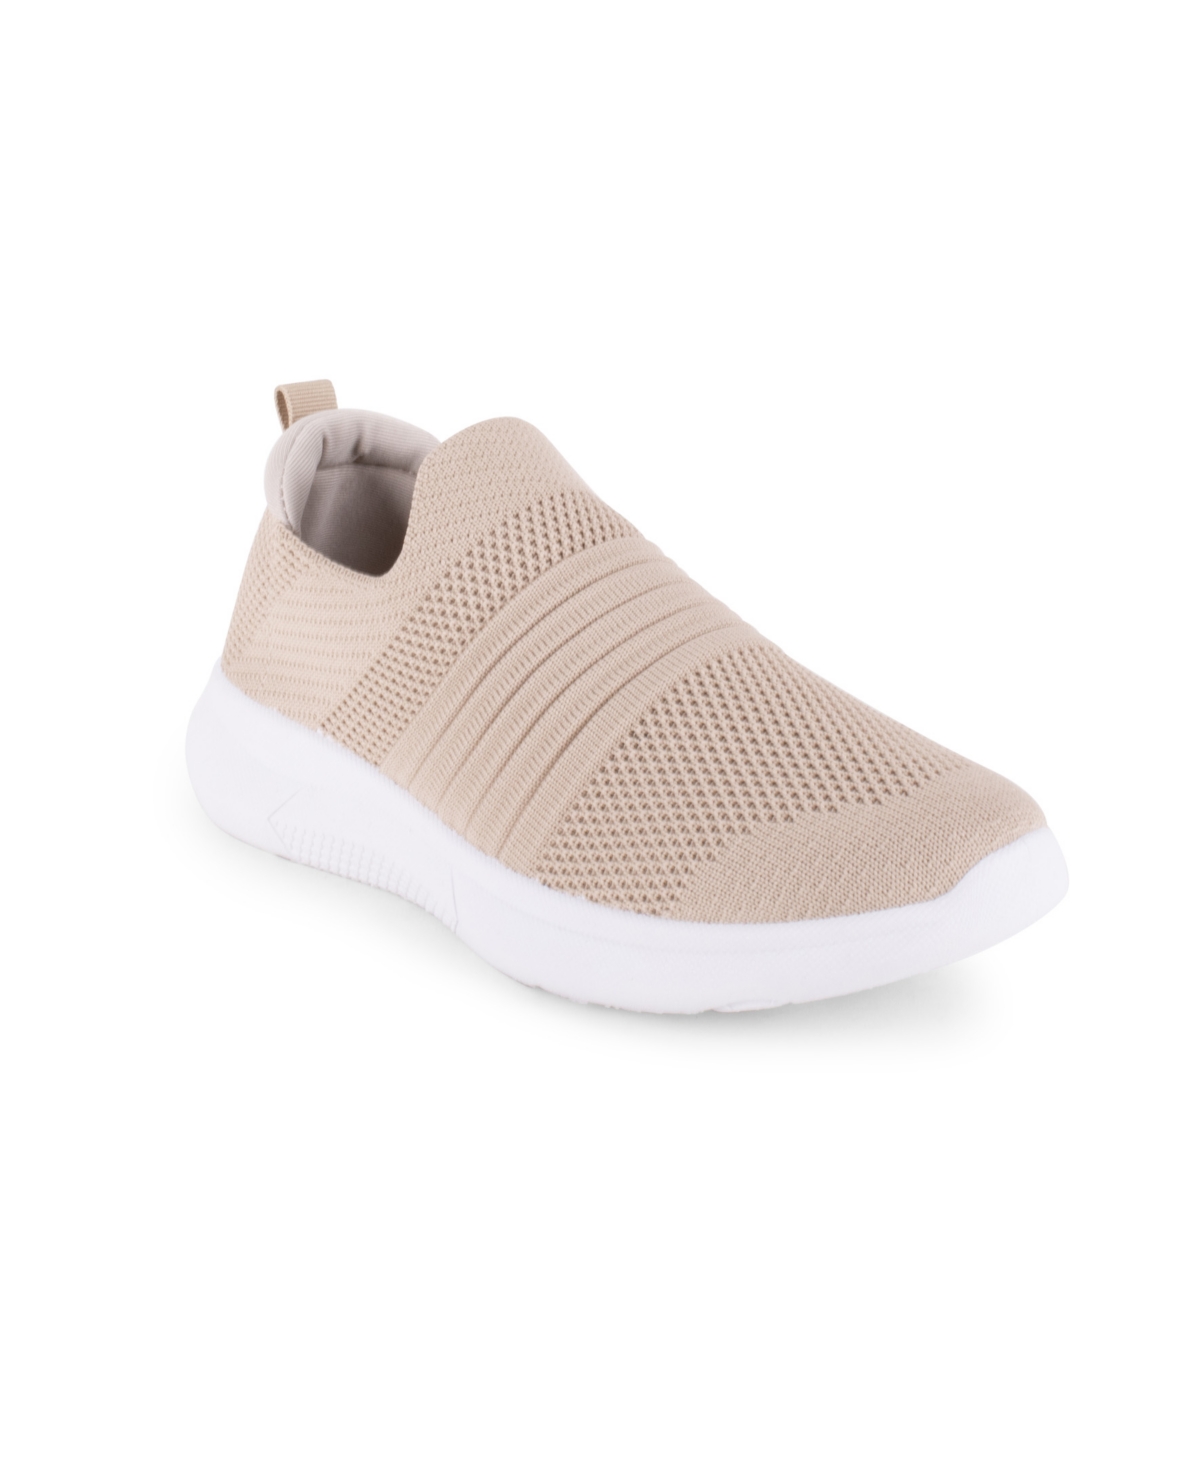 Women's Tumble Slip On Sneaker - Pink/grey